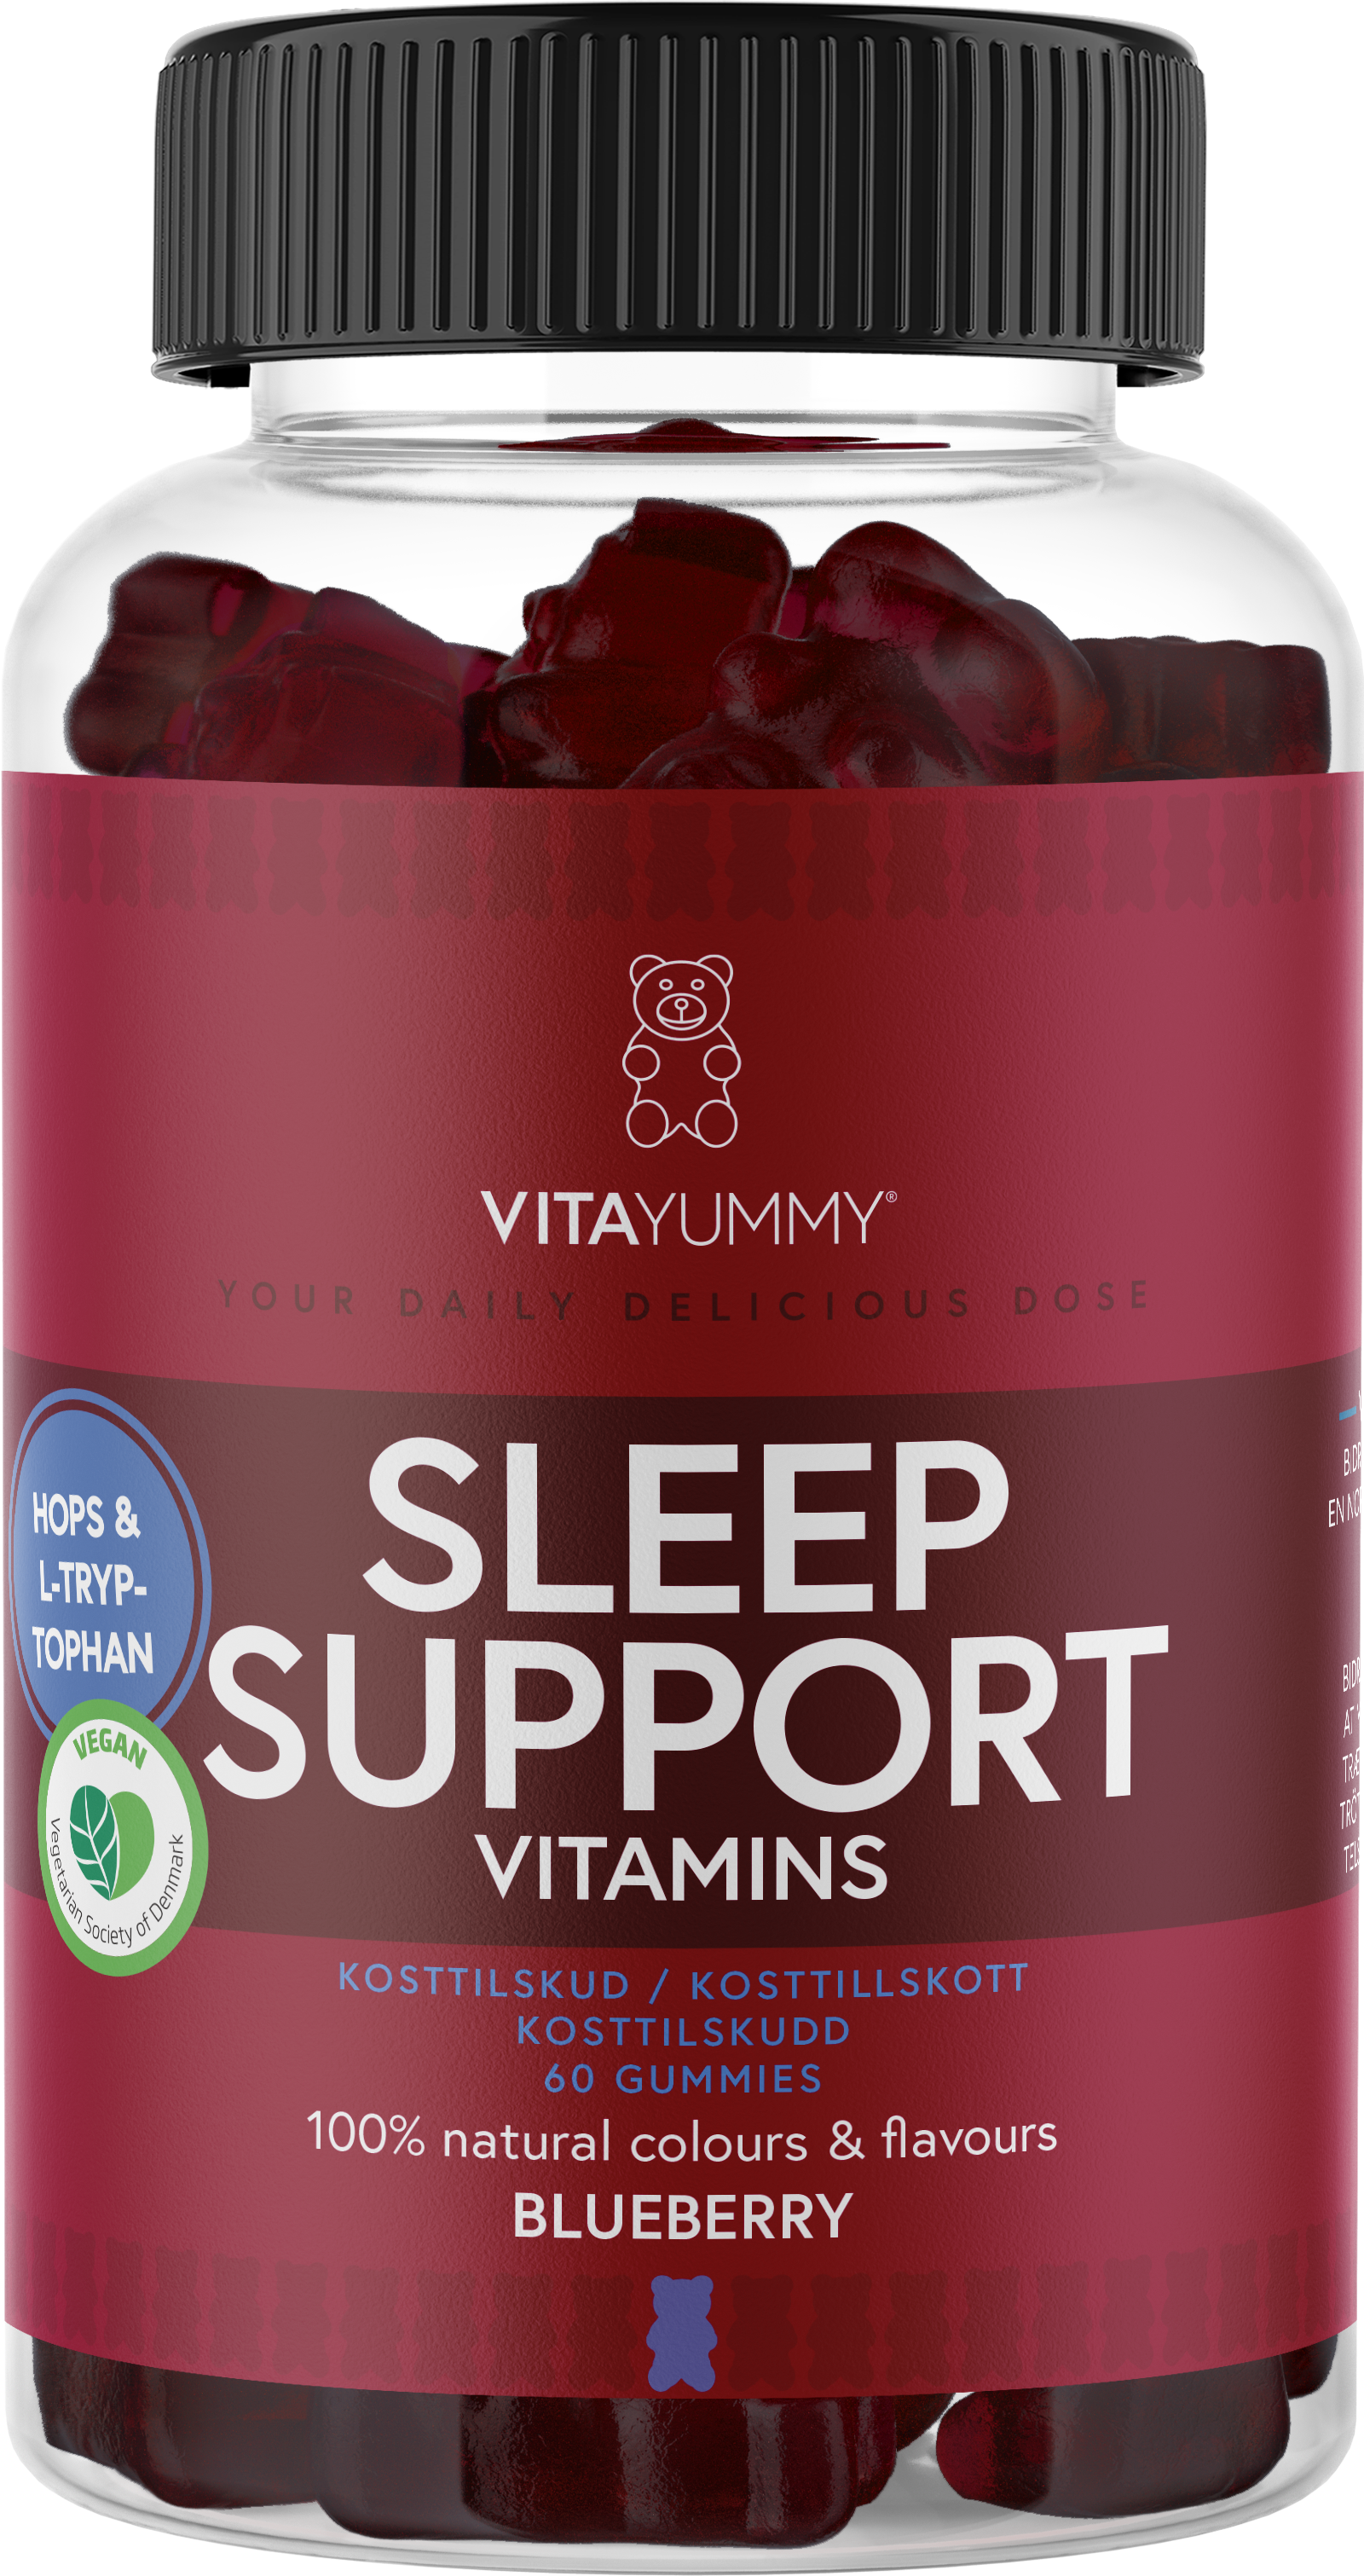 Vitayummy Sleep Support Blueberry 60 tuggtabletter